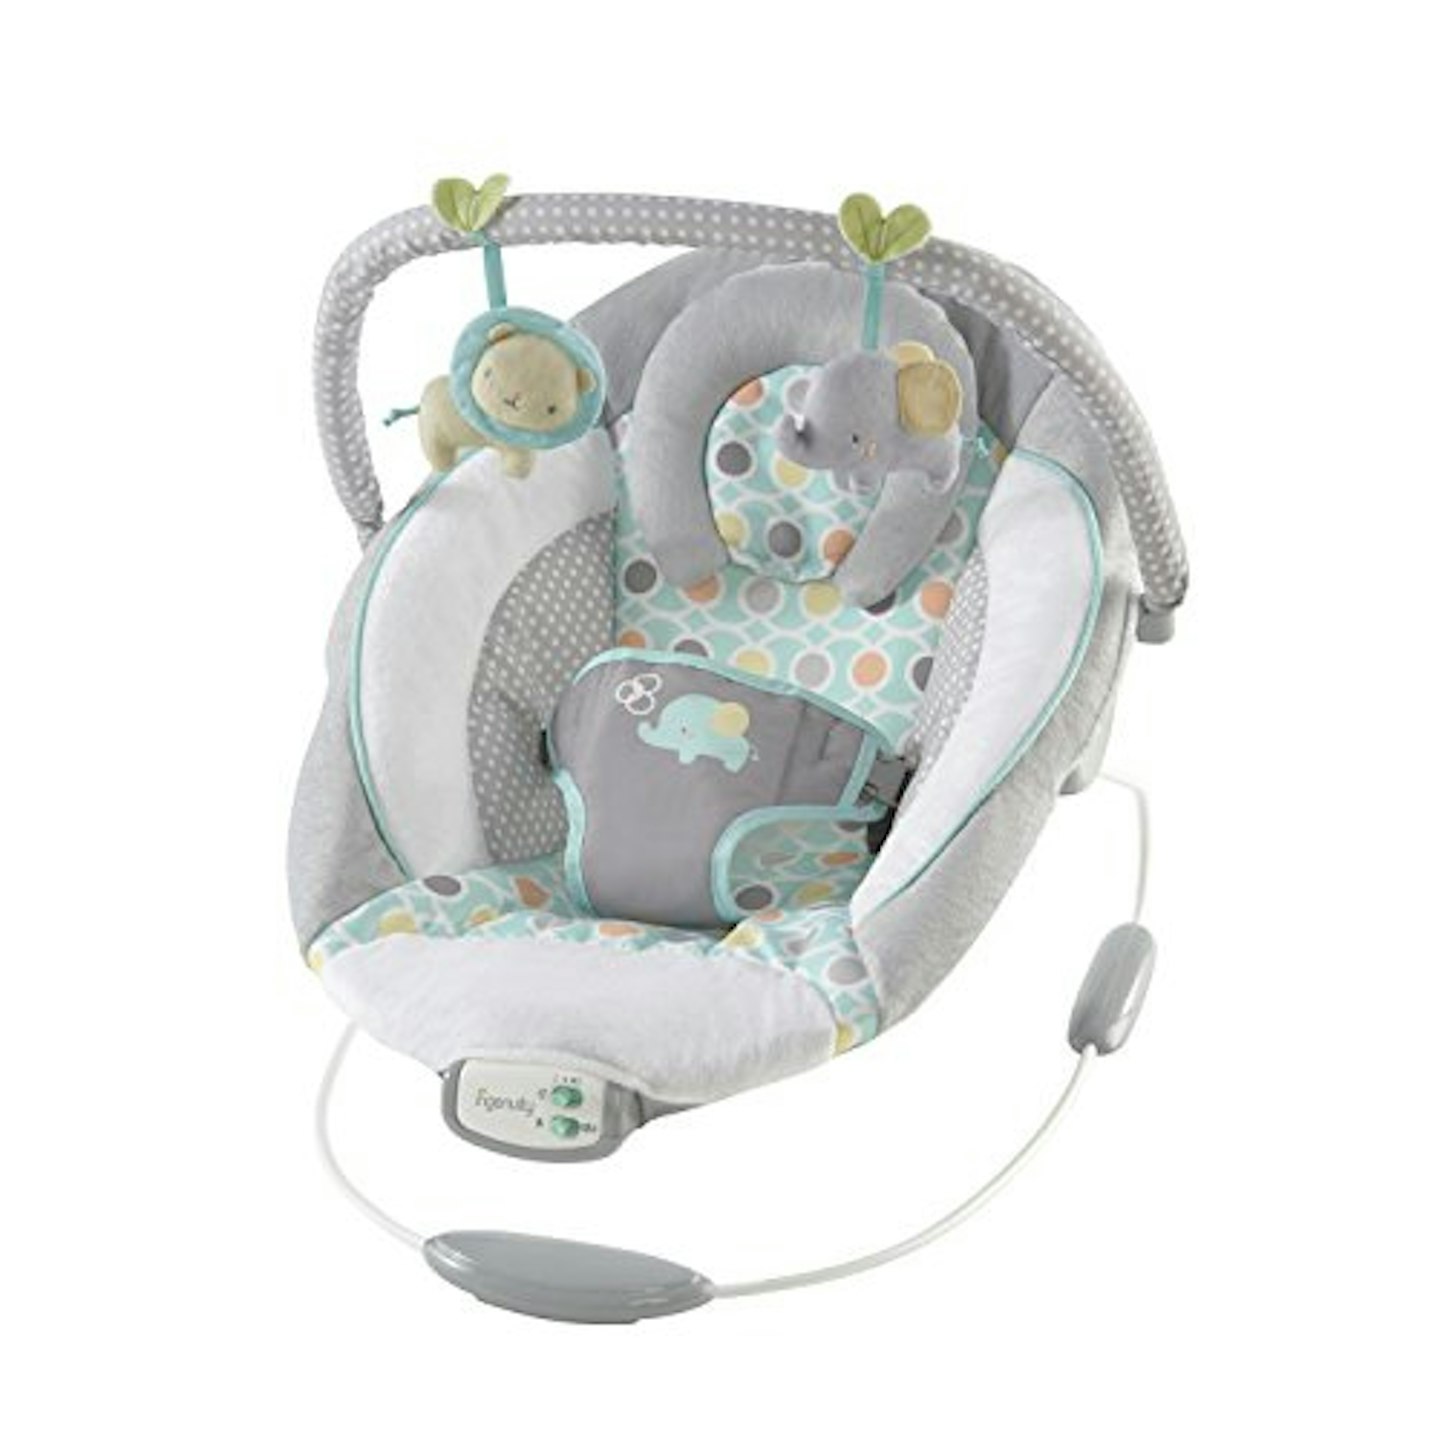 Ingenuity Cradling Bounceru2122 - Morrison - Baby shower gift